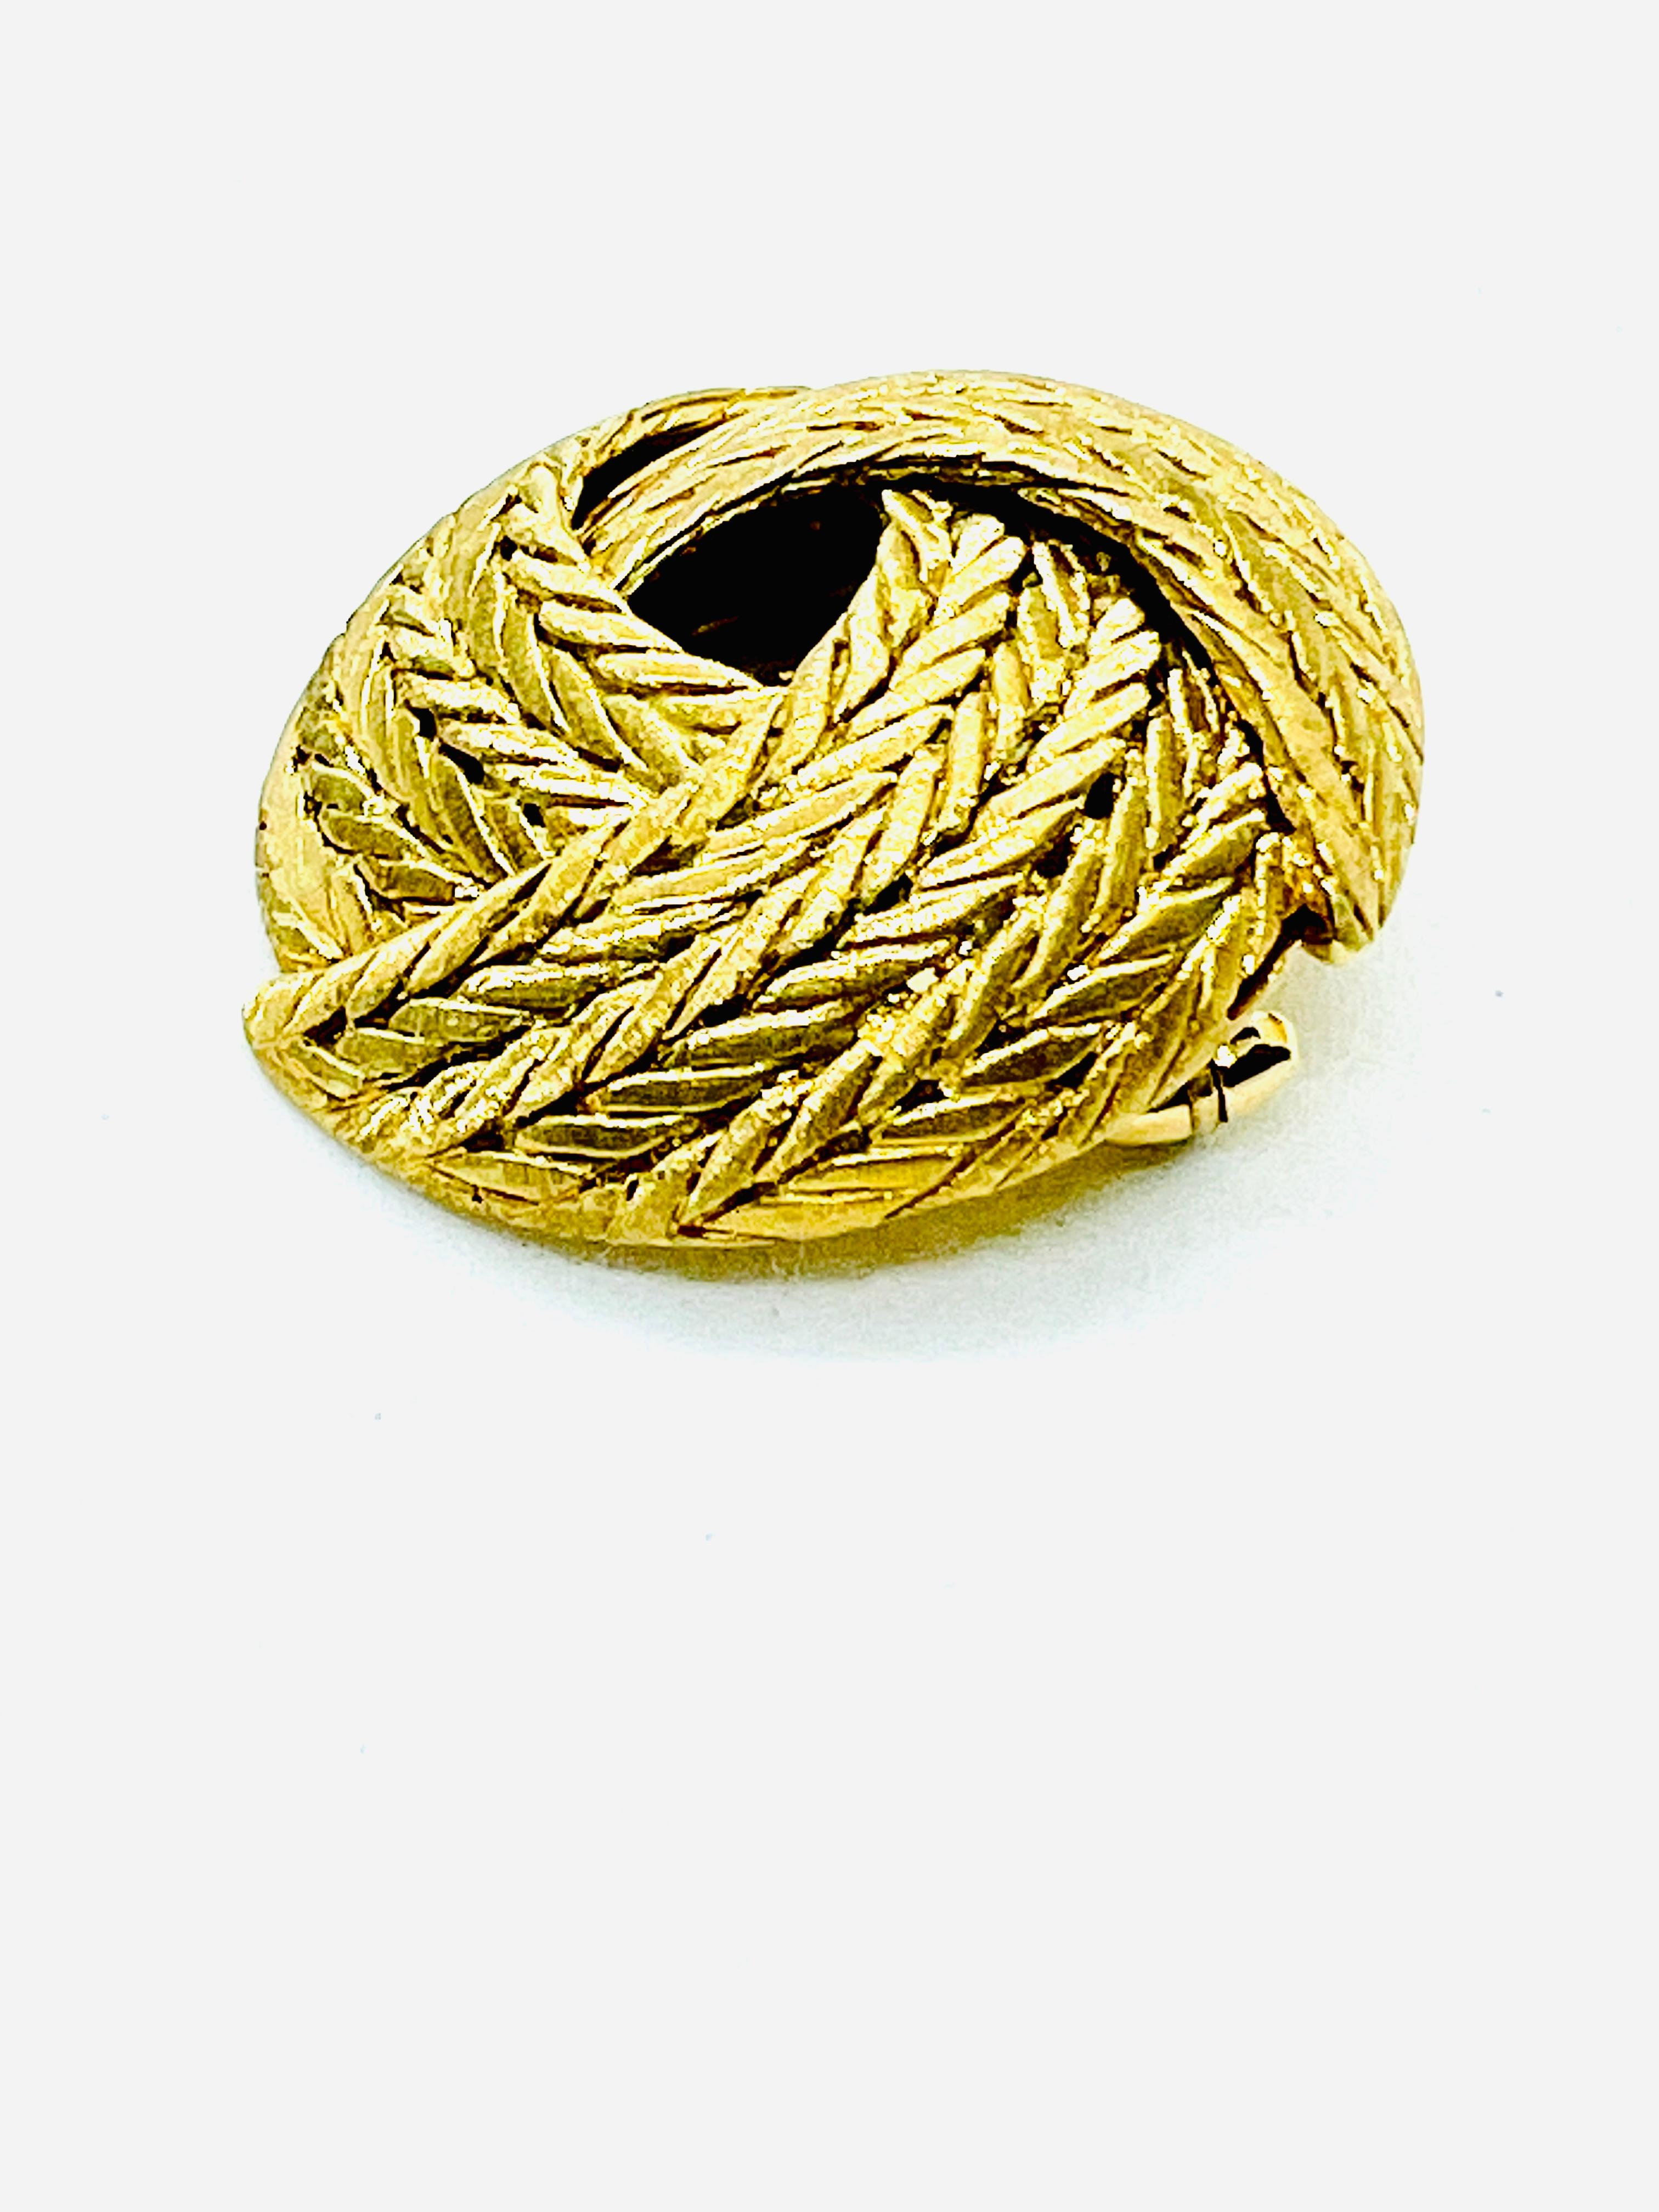 Designer Buccellati 18K yellow Gold 32mm Round woven basket weave brooch For Sale 1